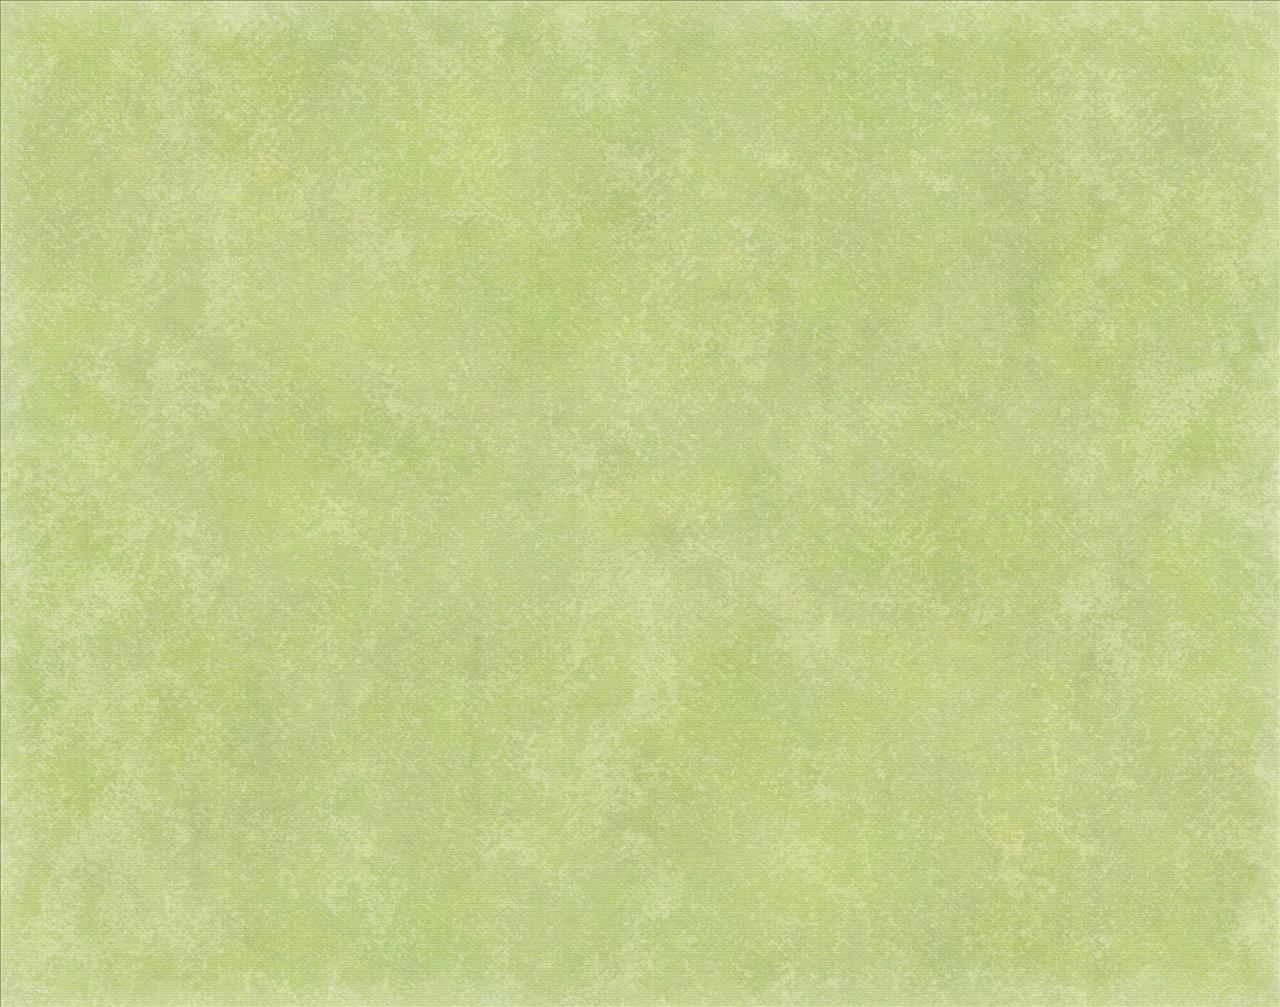 Pale Green Background Jpg